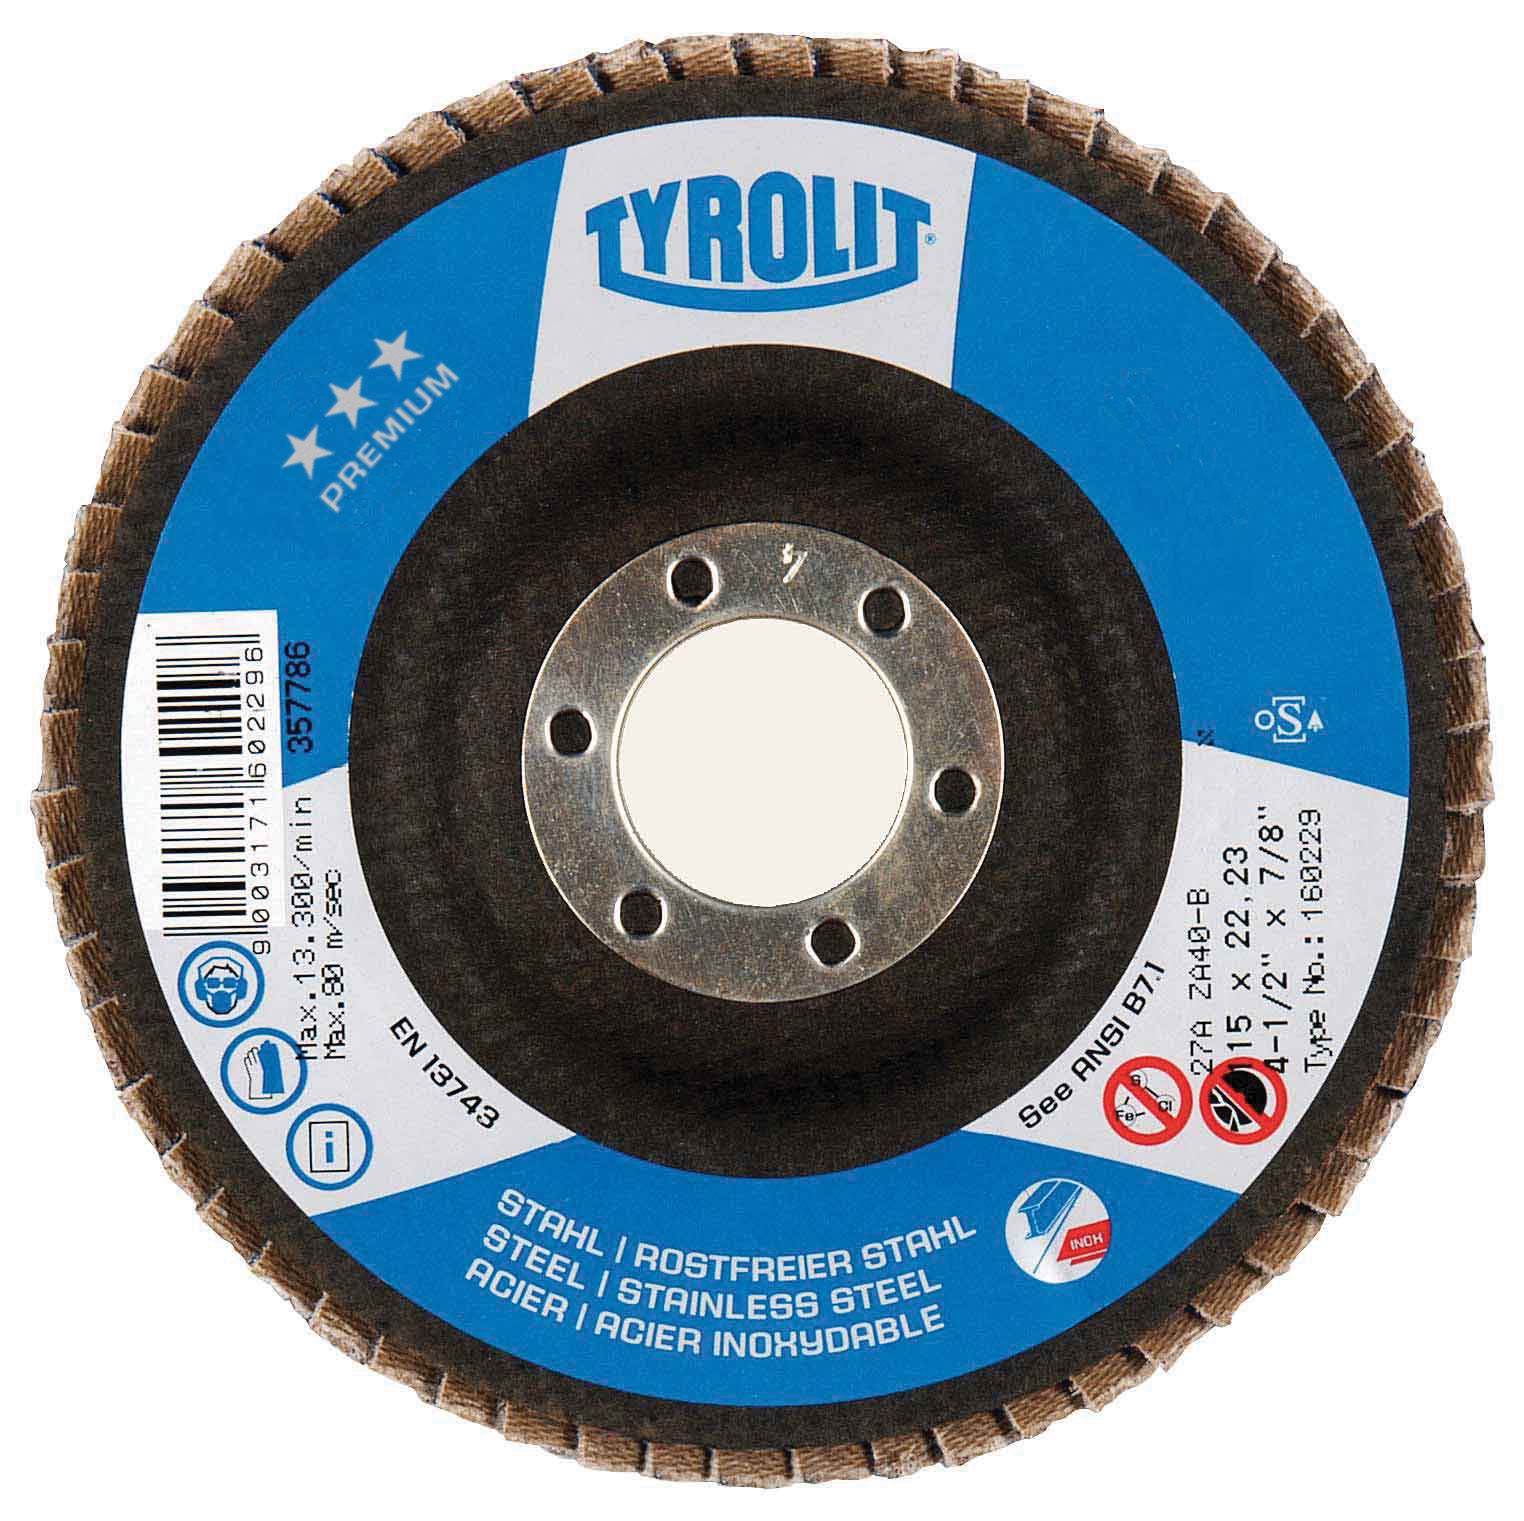 Tyrolit 816962 Flap Wheel Tyr 52LA C X 60x30 6X40 A150 P01 